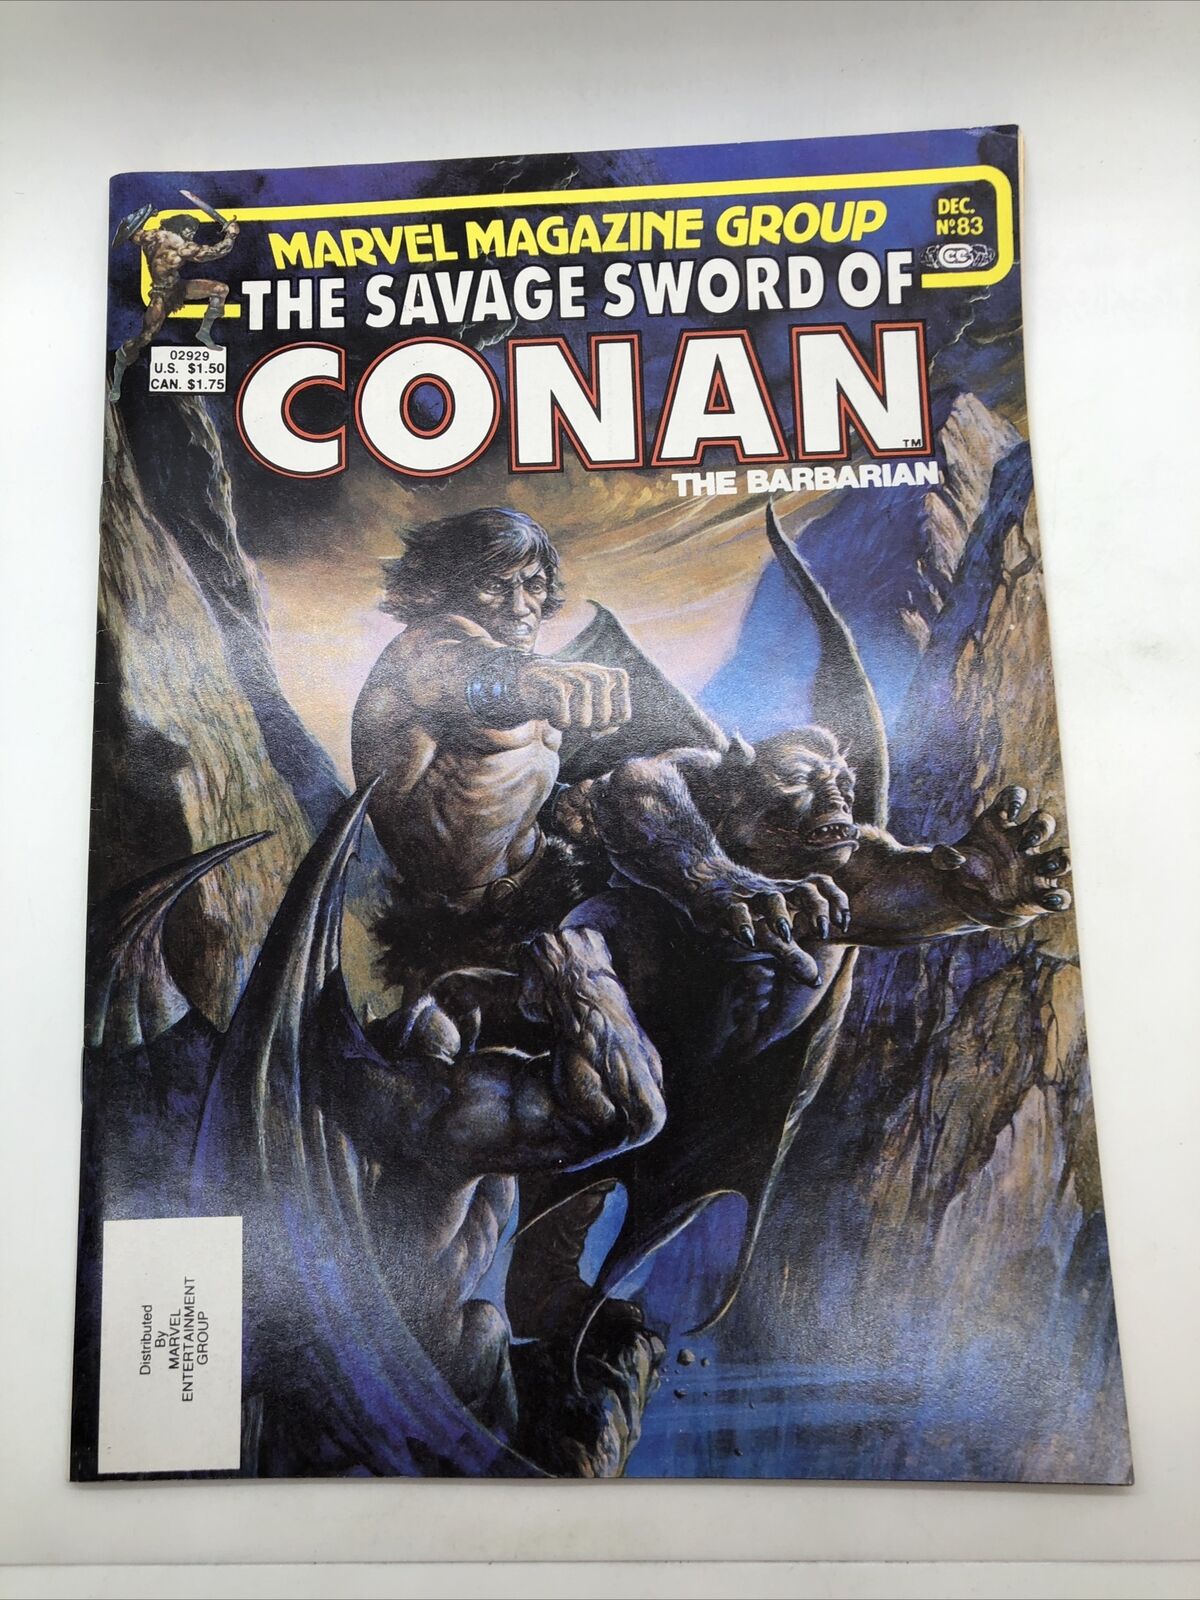 The Savage Sword Of Conan The Barbarian Dec#83 Marvel Magazine Group